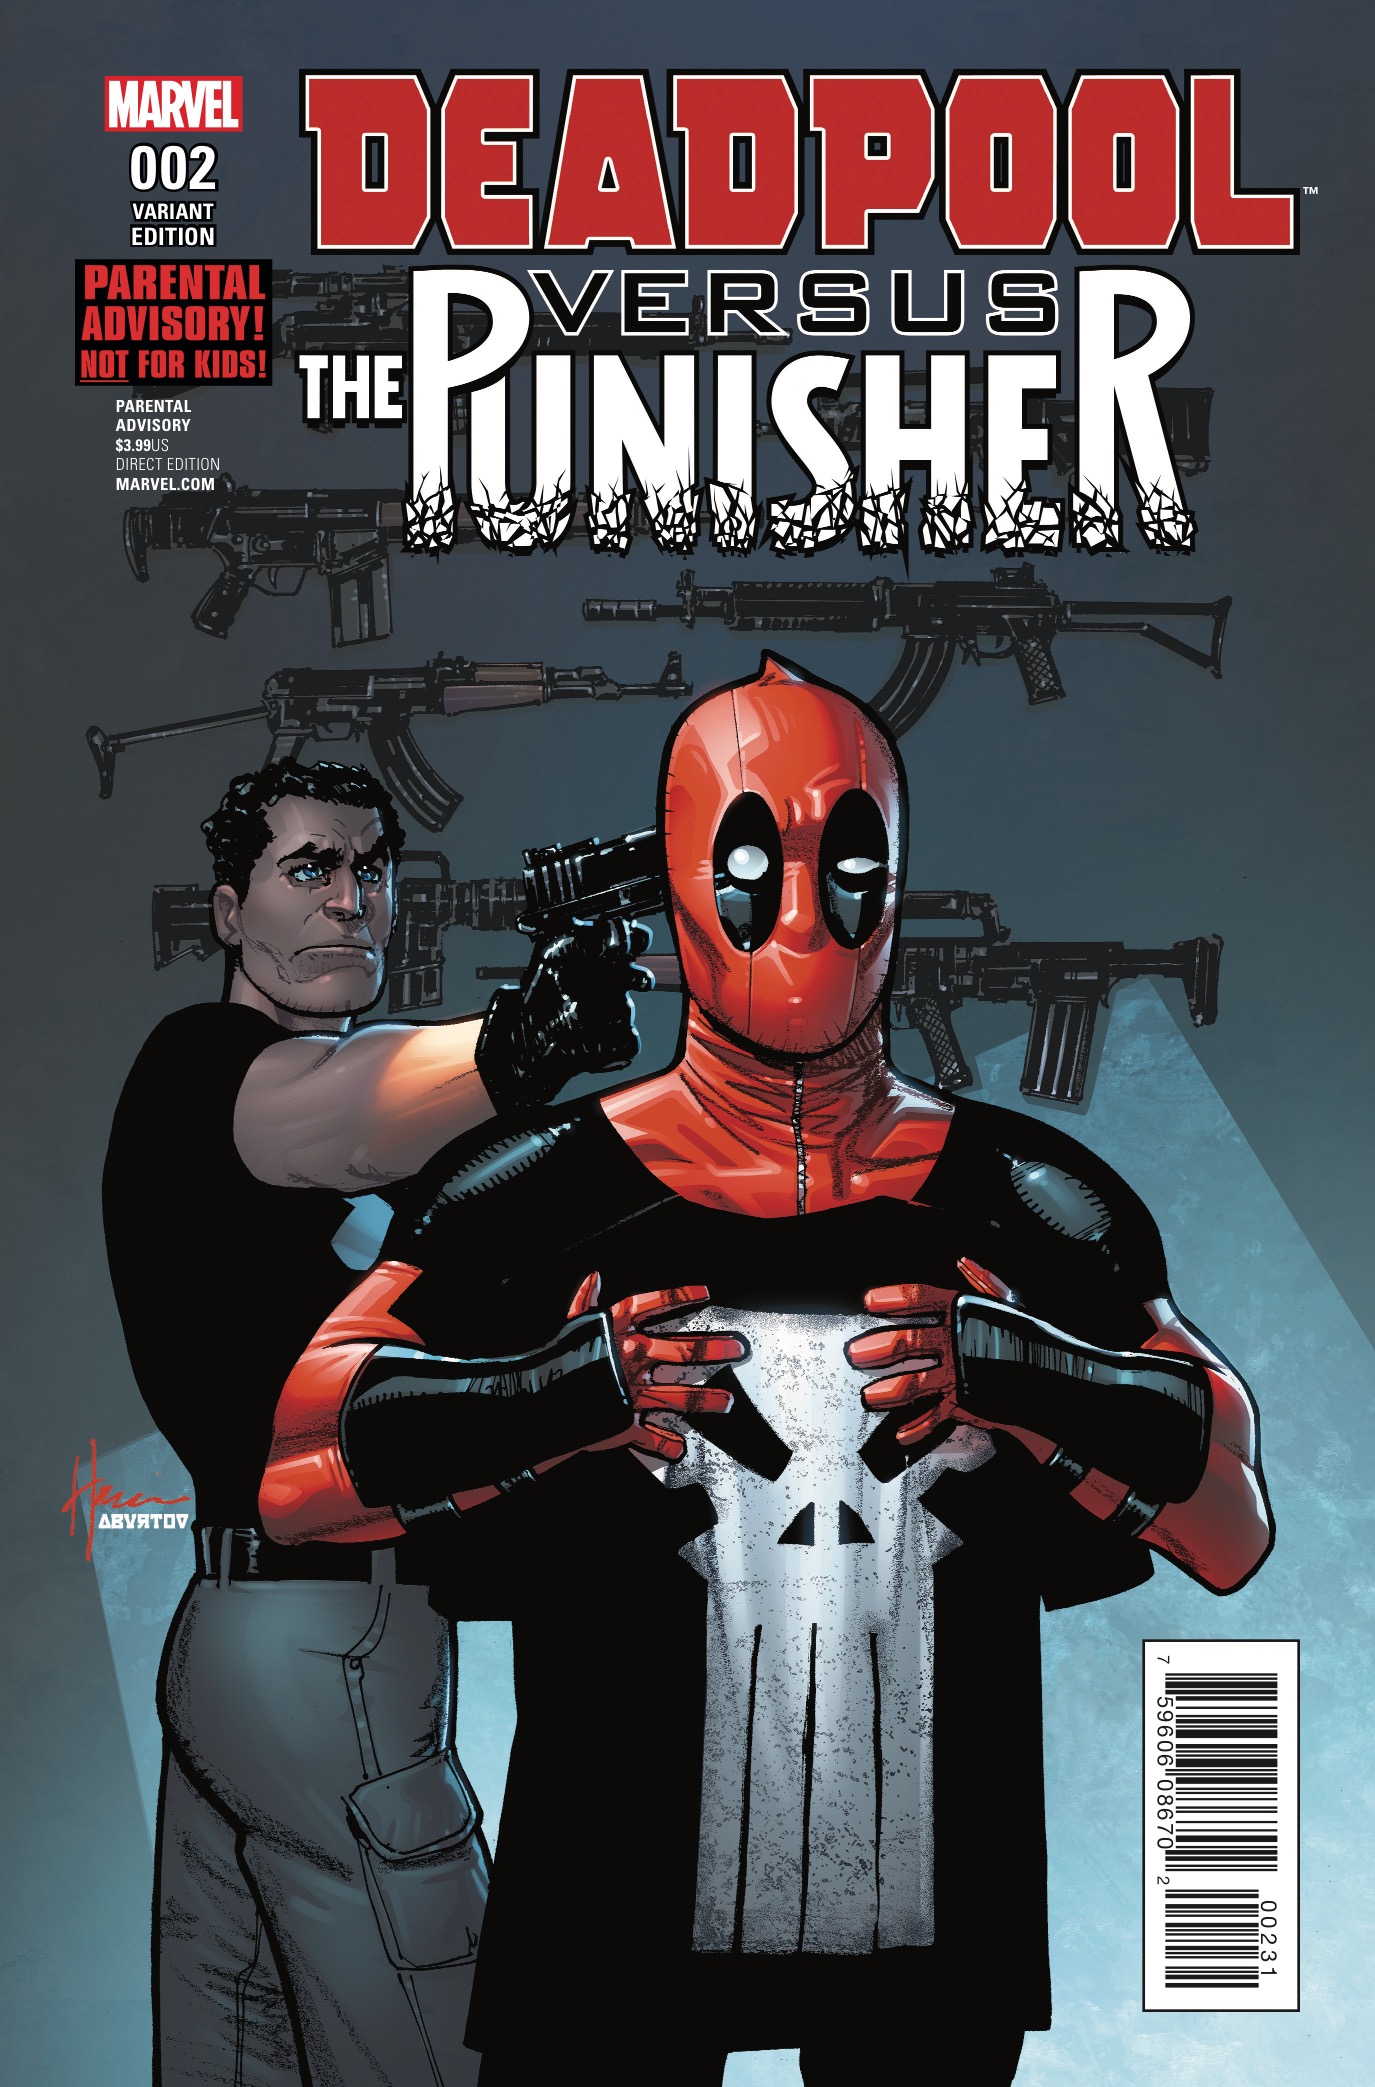 Deadpool vs. The Punisher #2 Review